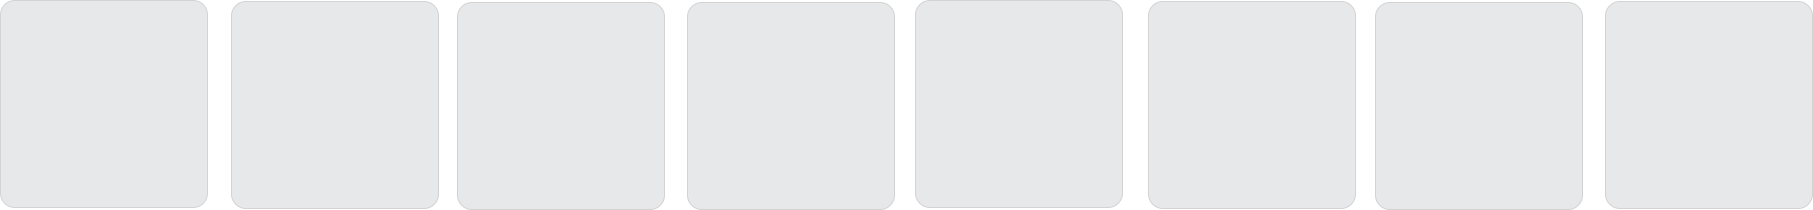 placeholder linear blocks